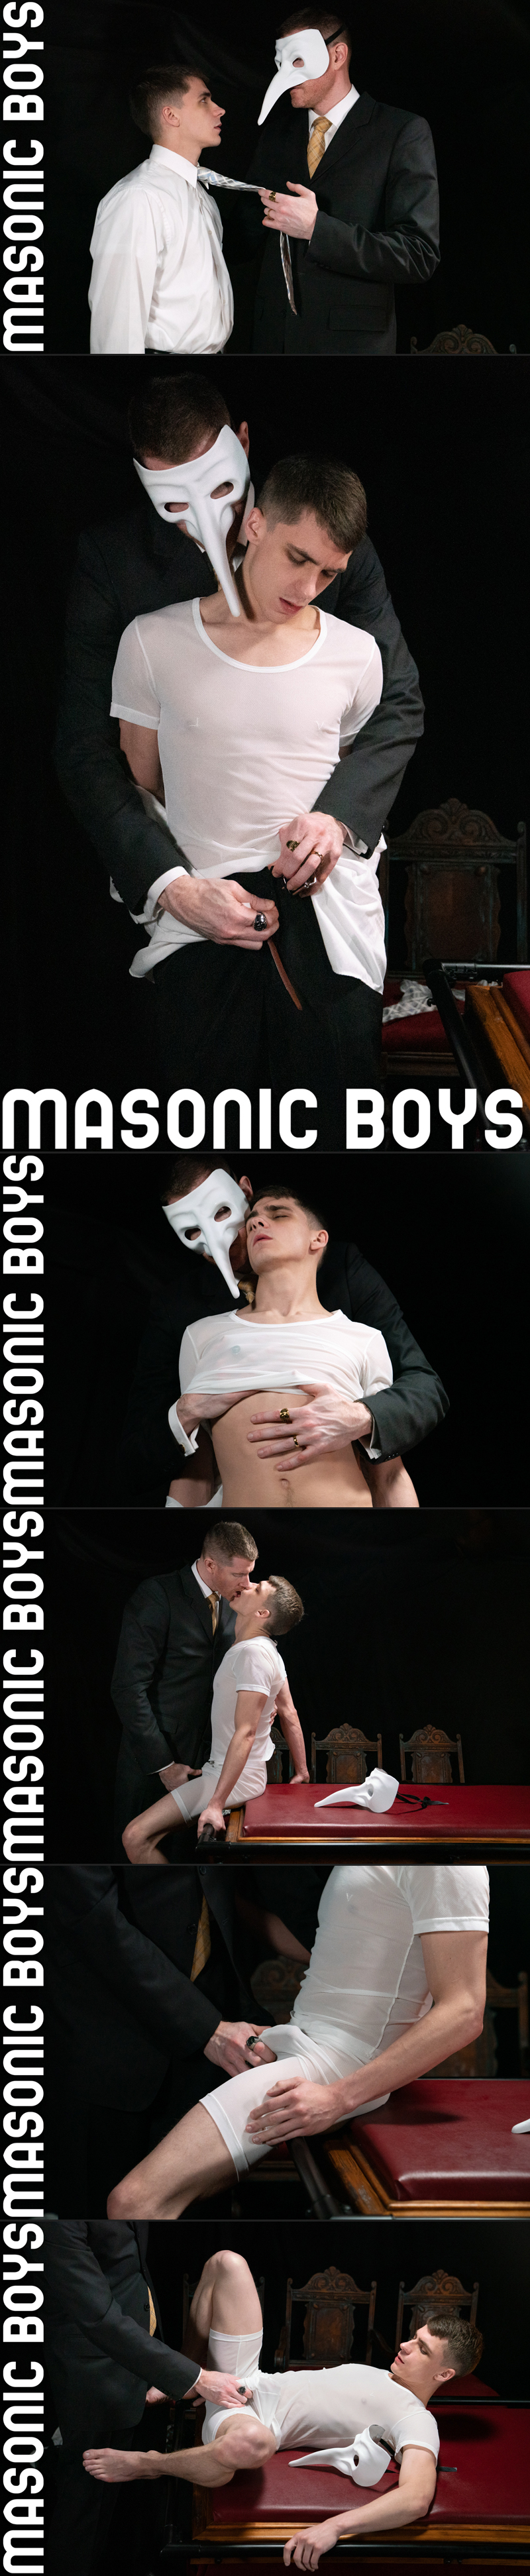 Apprentice Marcus Ryan: CHAPTER 7: The Sacrament at Masonic Boys